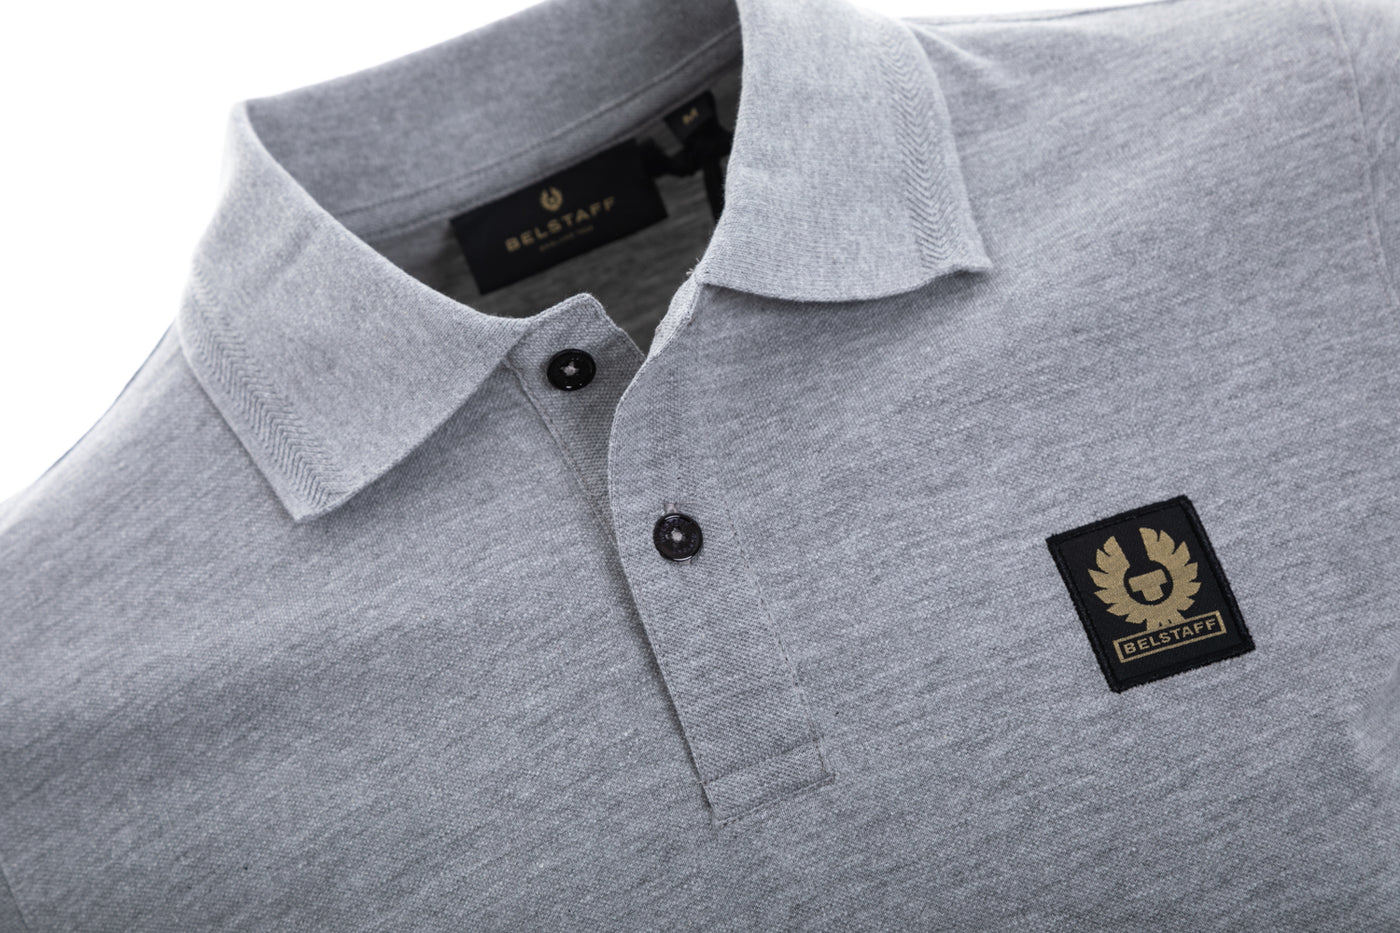 Belstaff Classic Short Sleeve Polo Shirt in Grey Melange Placket